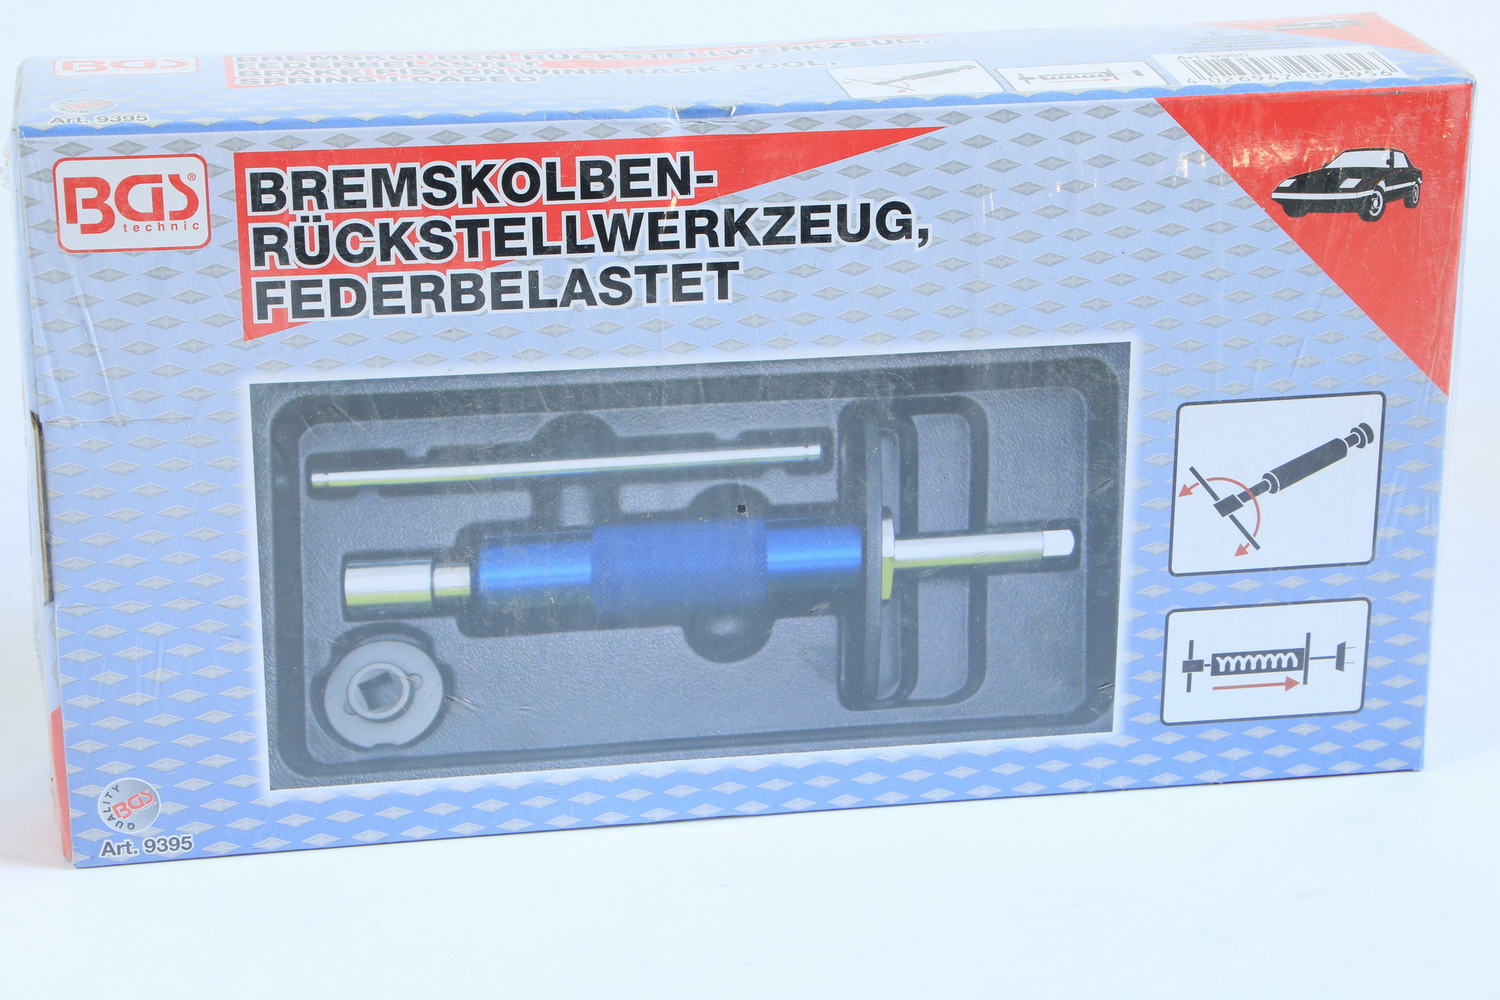 Trust Kai - BGS Bremskolben-Rückstellwerkzeug federbelastet Bremssattel  Rücksteller 9395